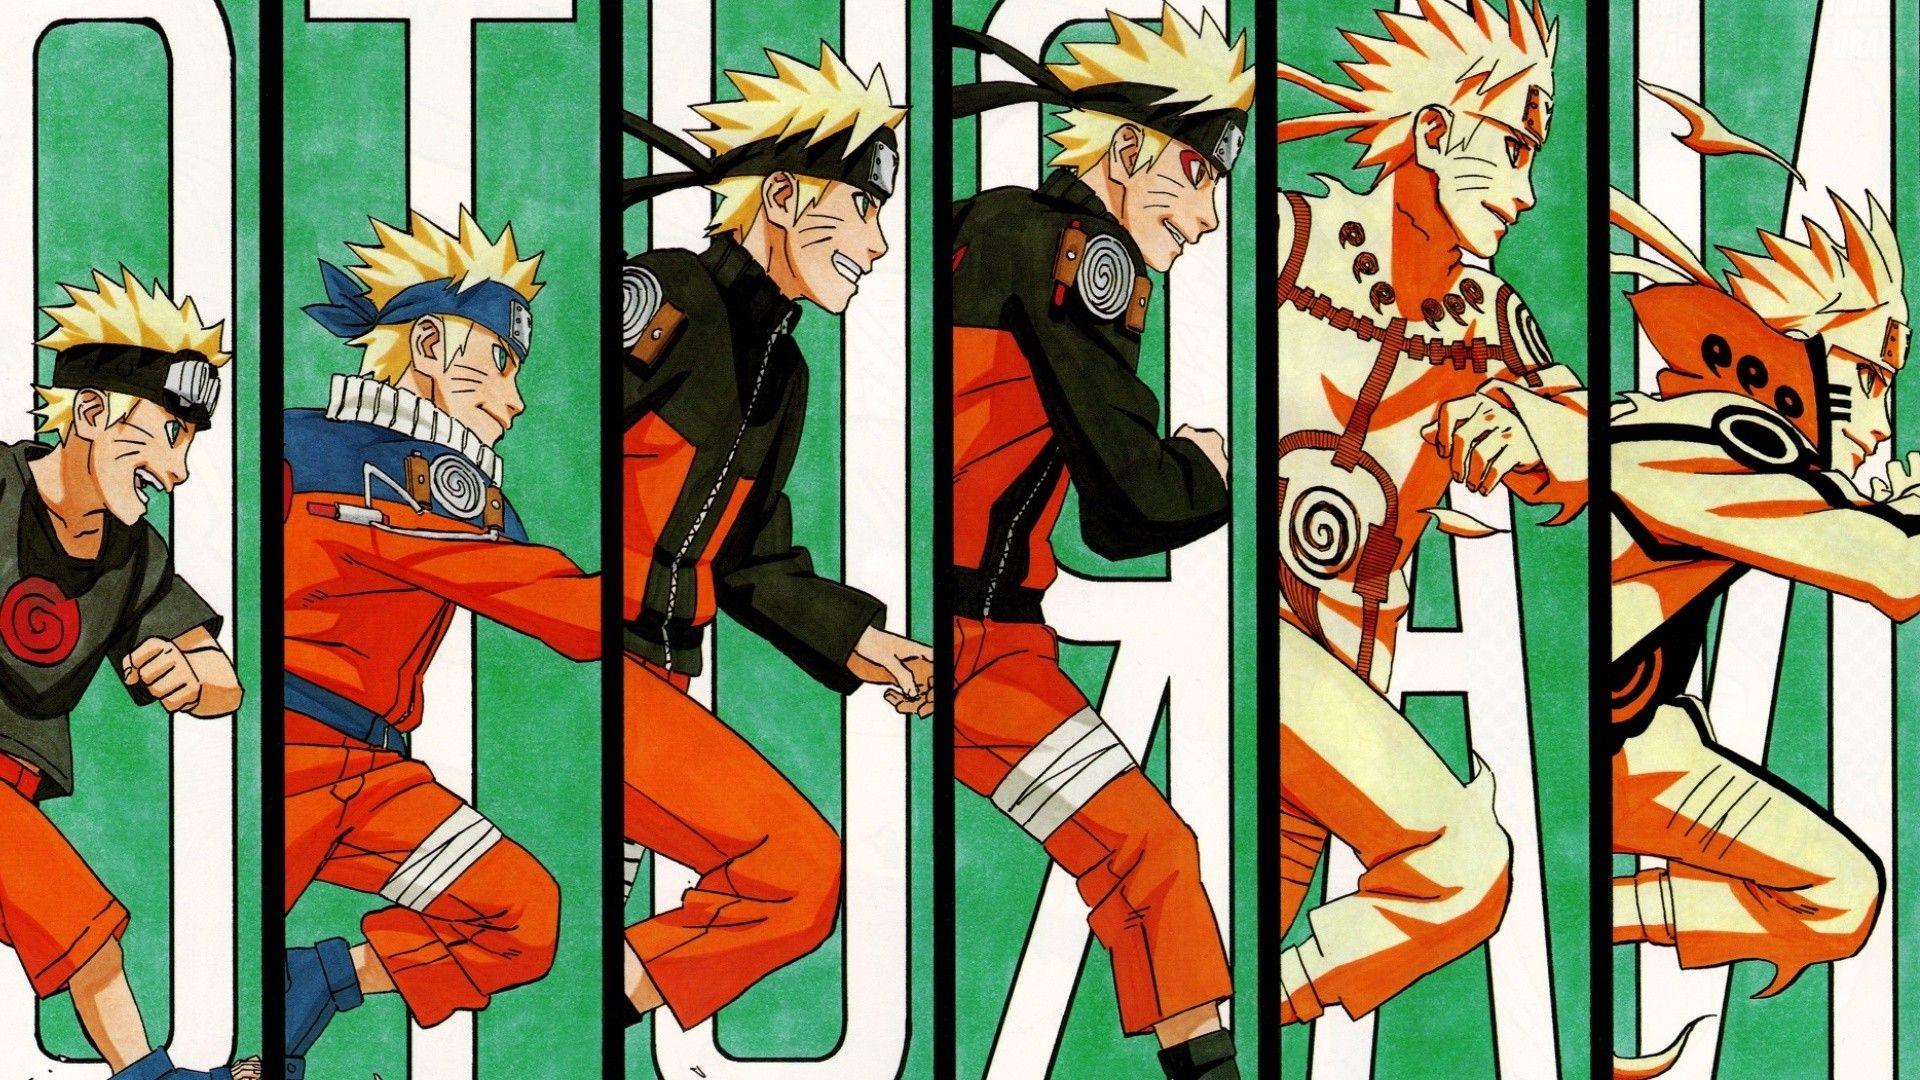 Naruto Shippuden Manga Wallpapers - Wallpaper Cave